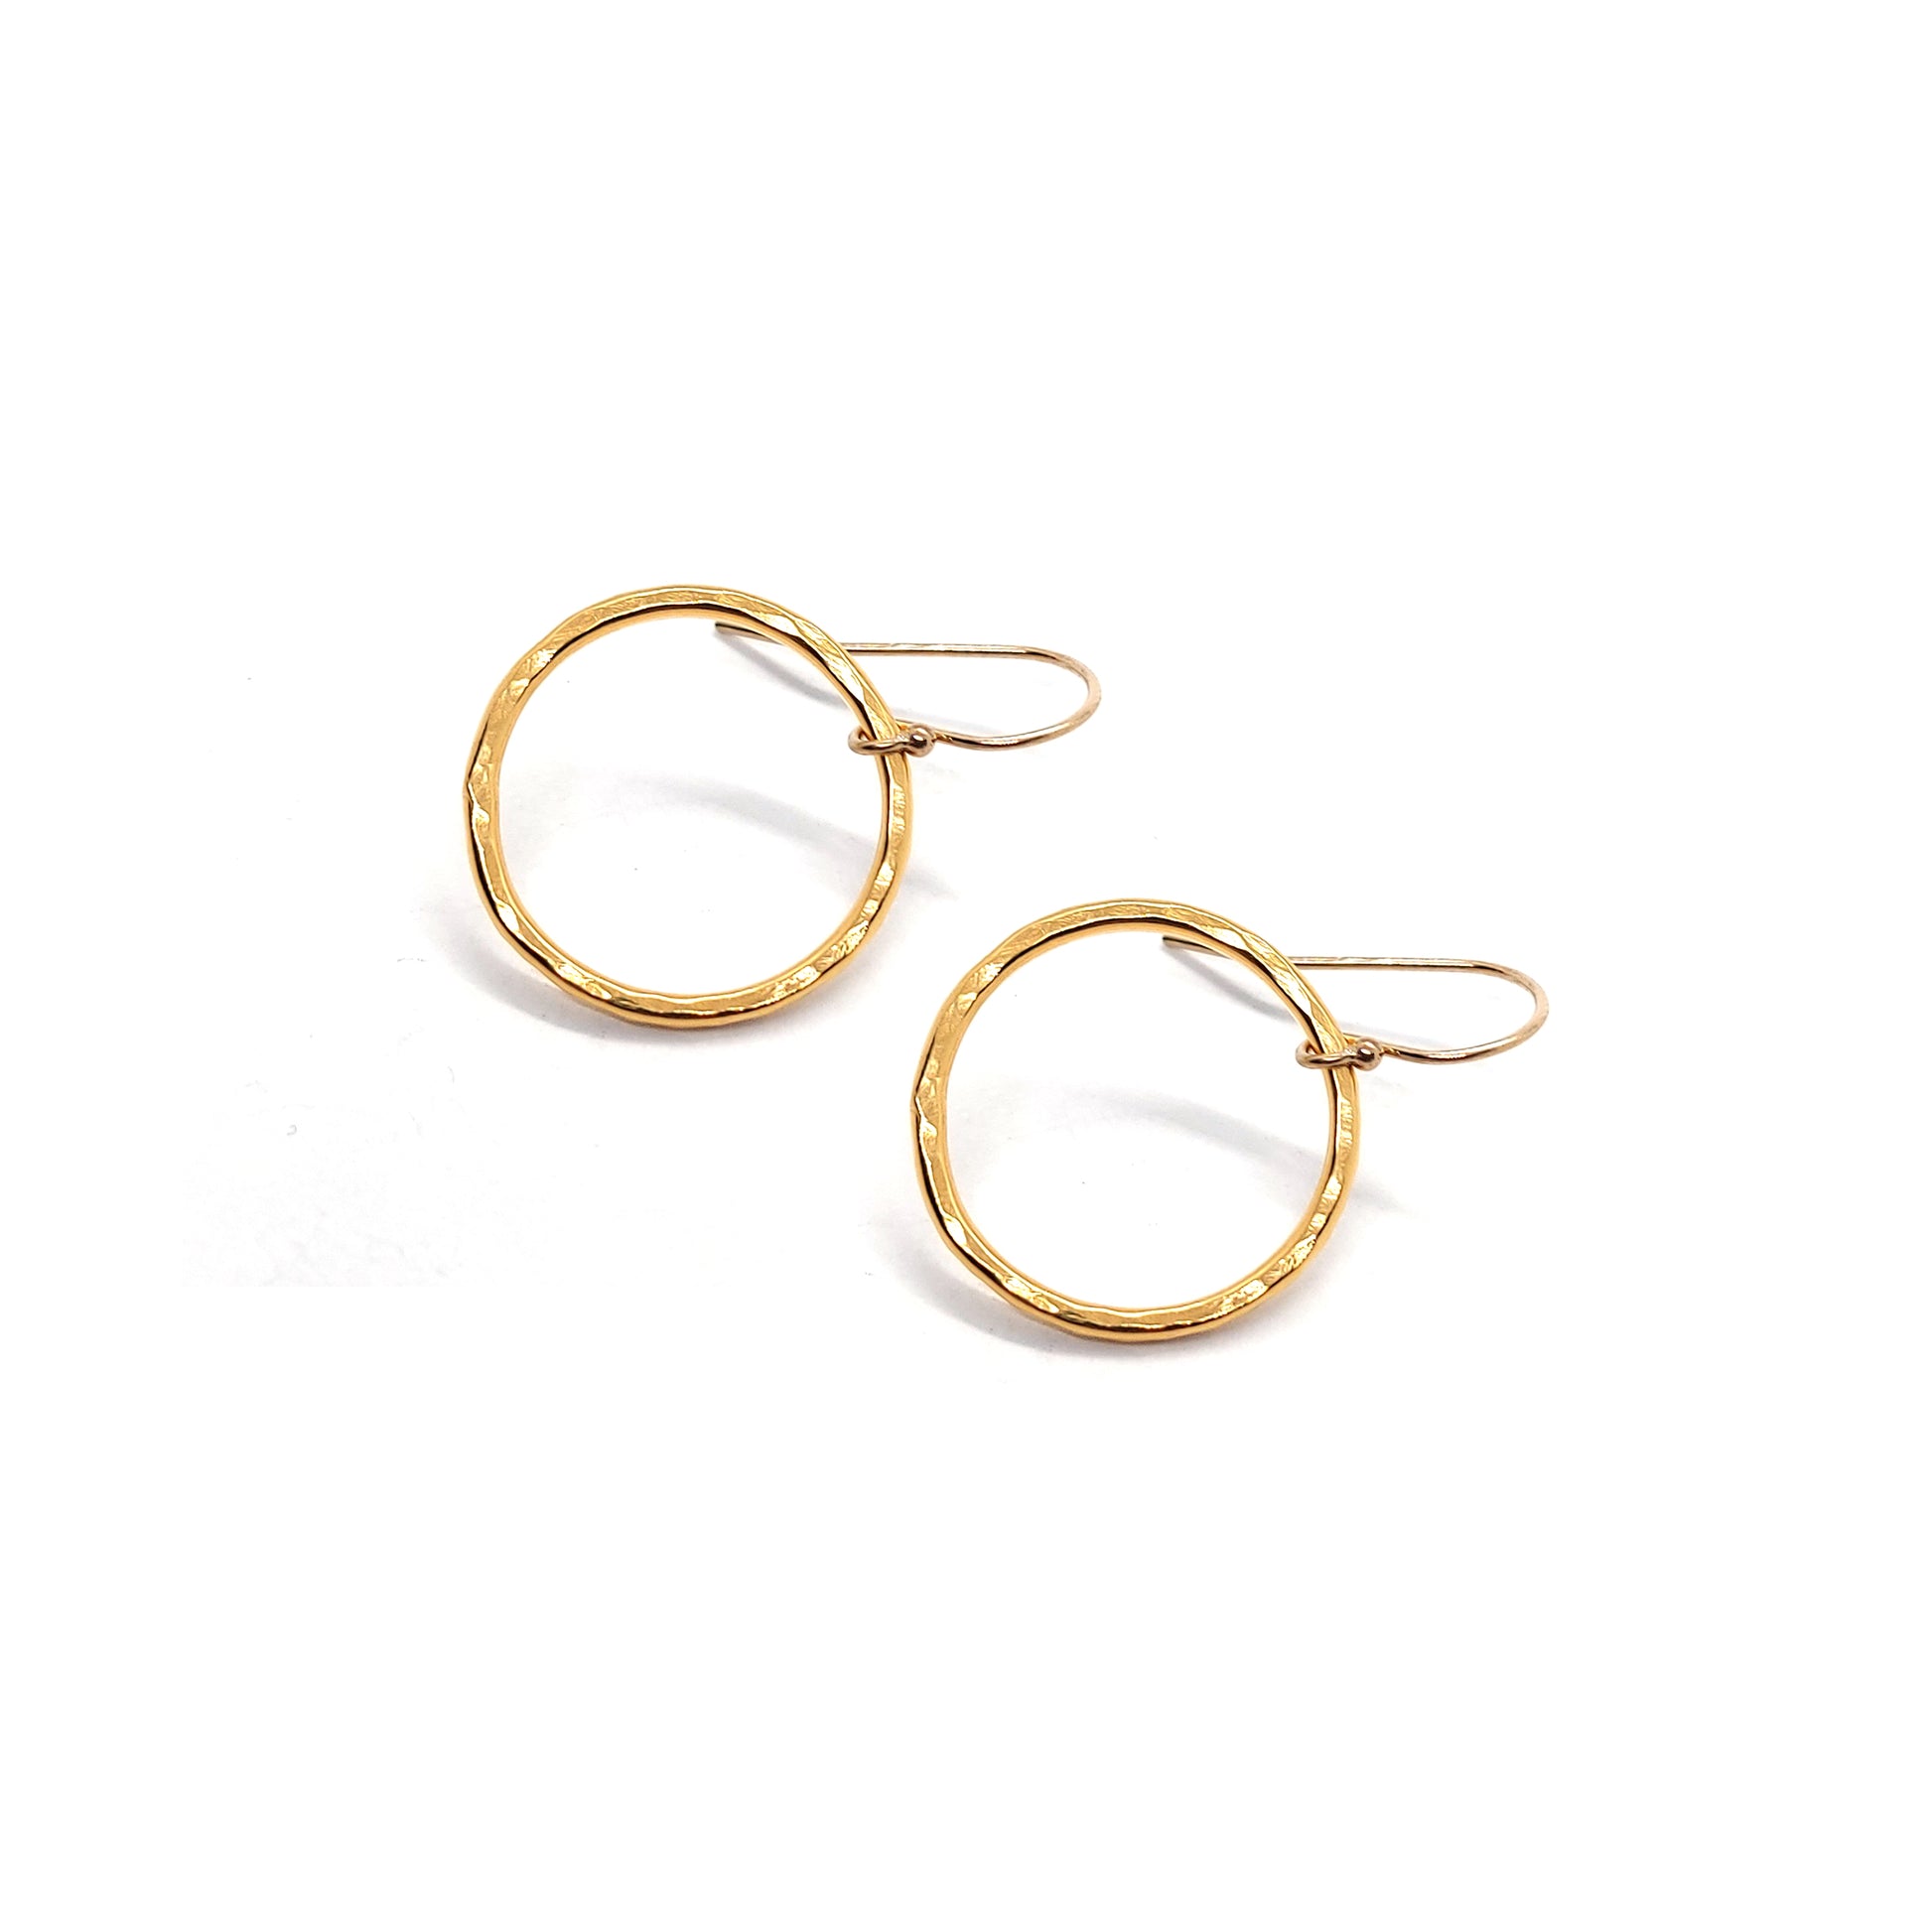 Yellow gold vermeil circle drop earrings. Large